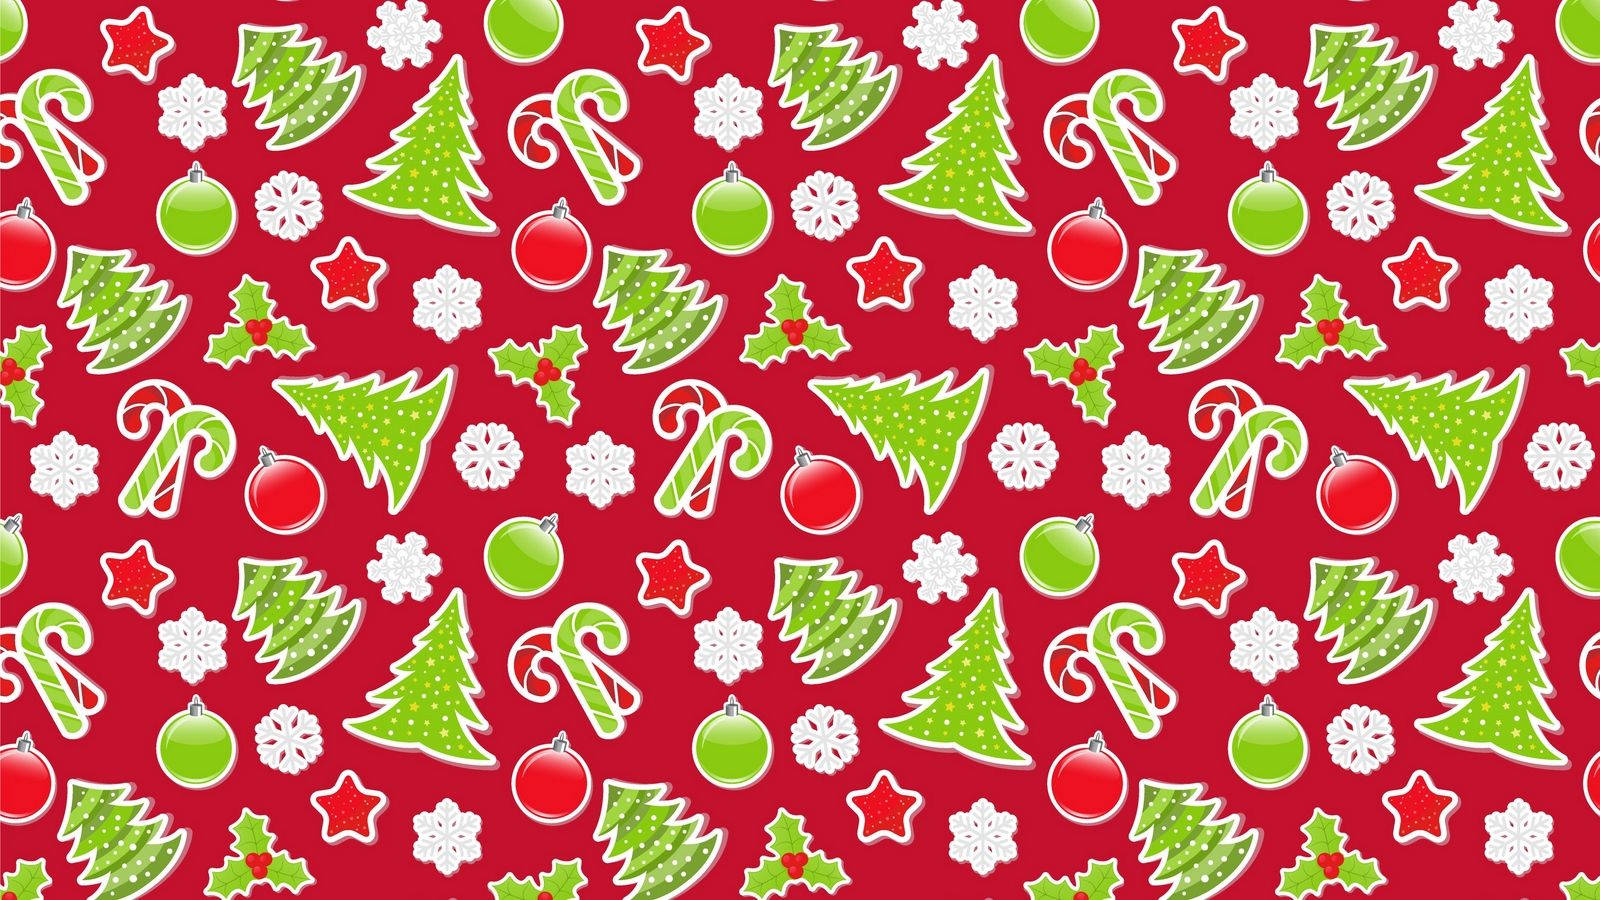 Jolly Christmas Festive Digital Illustration Wallpaper